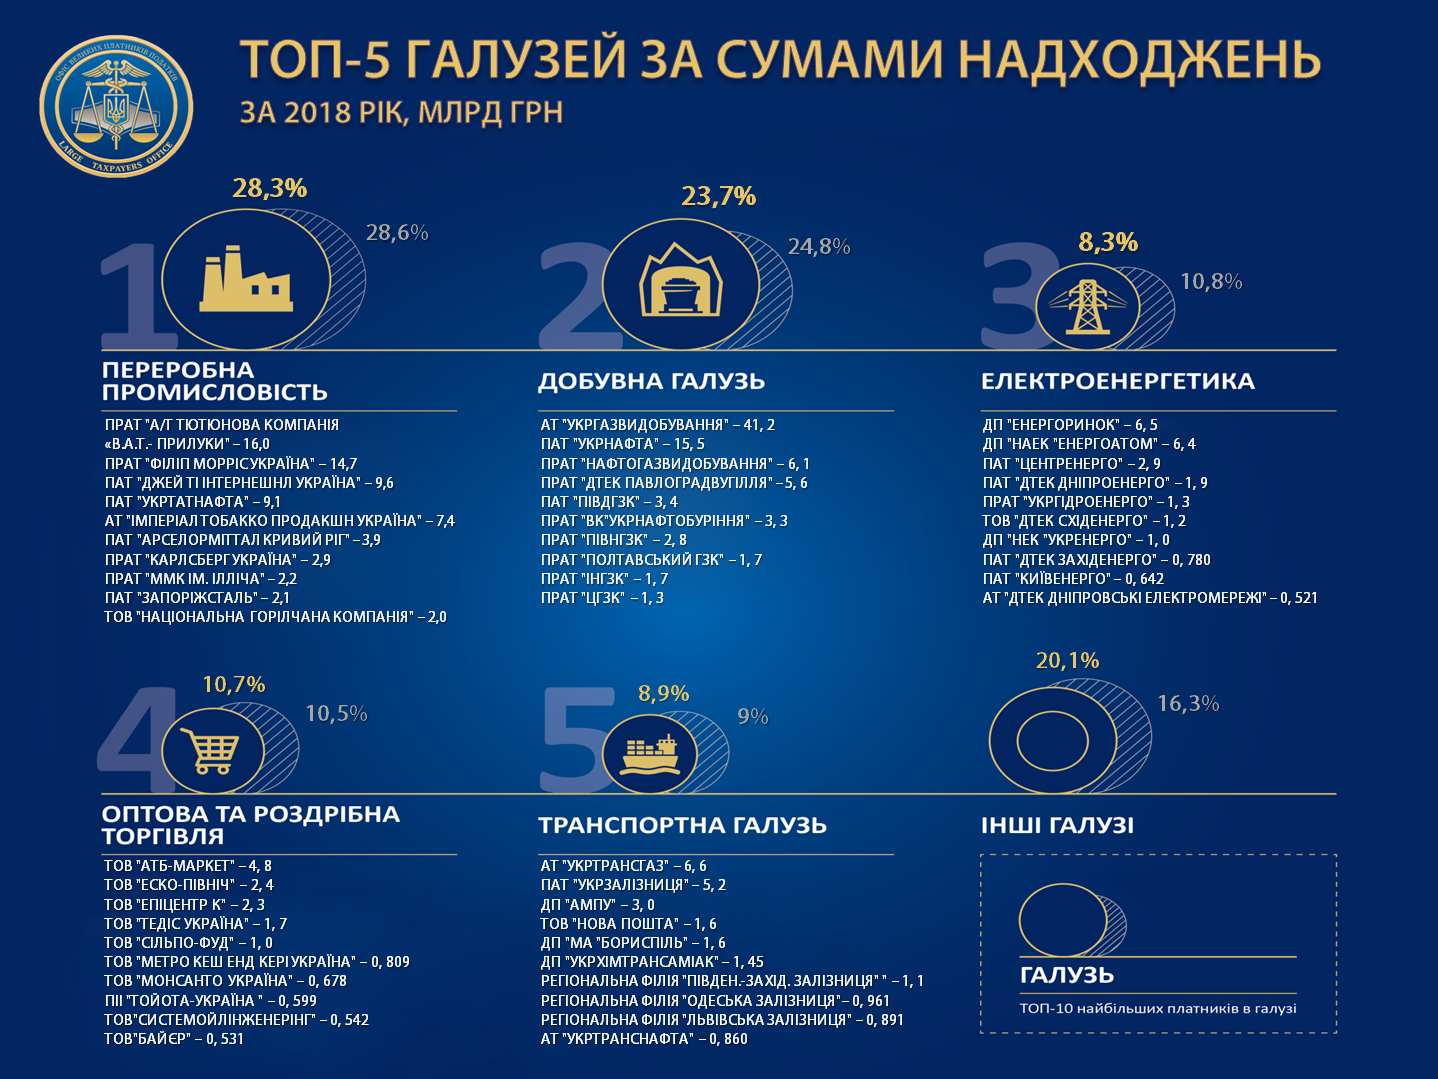 Vyznačeno 100 najbiľšyh ukraїnśkyh platnykiv podatkiv